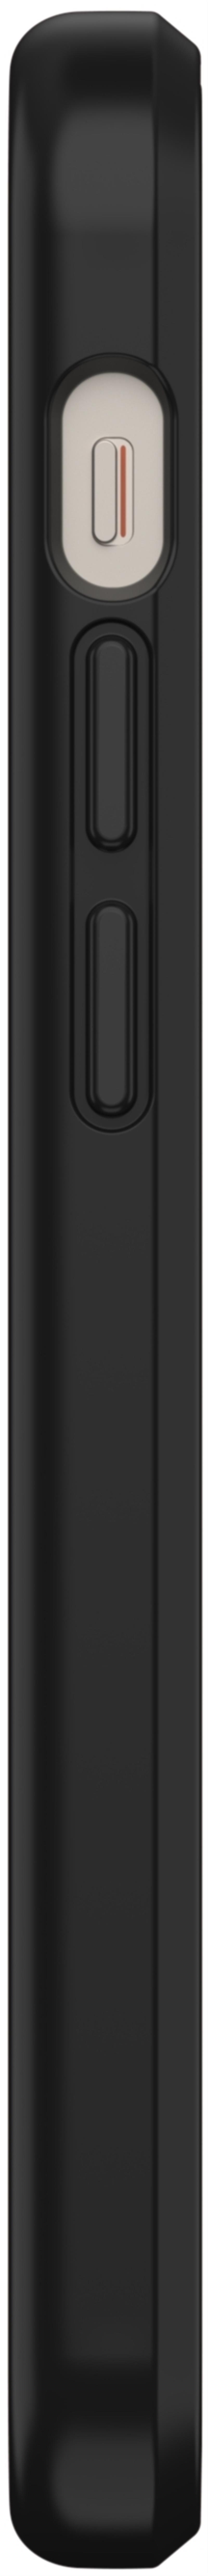 OtterBox React Series Apple iPhone 12 Mini Clear Black